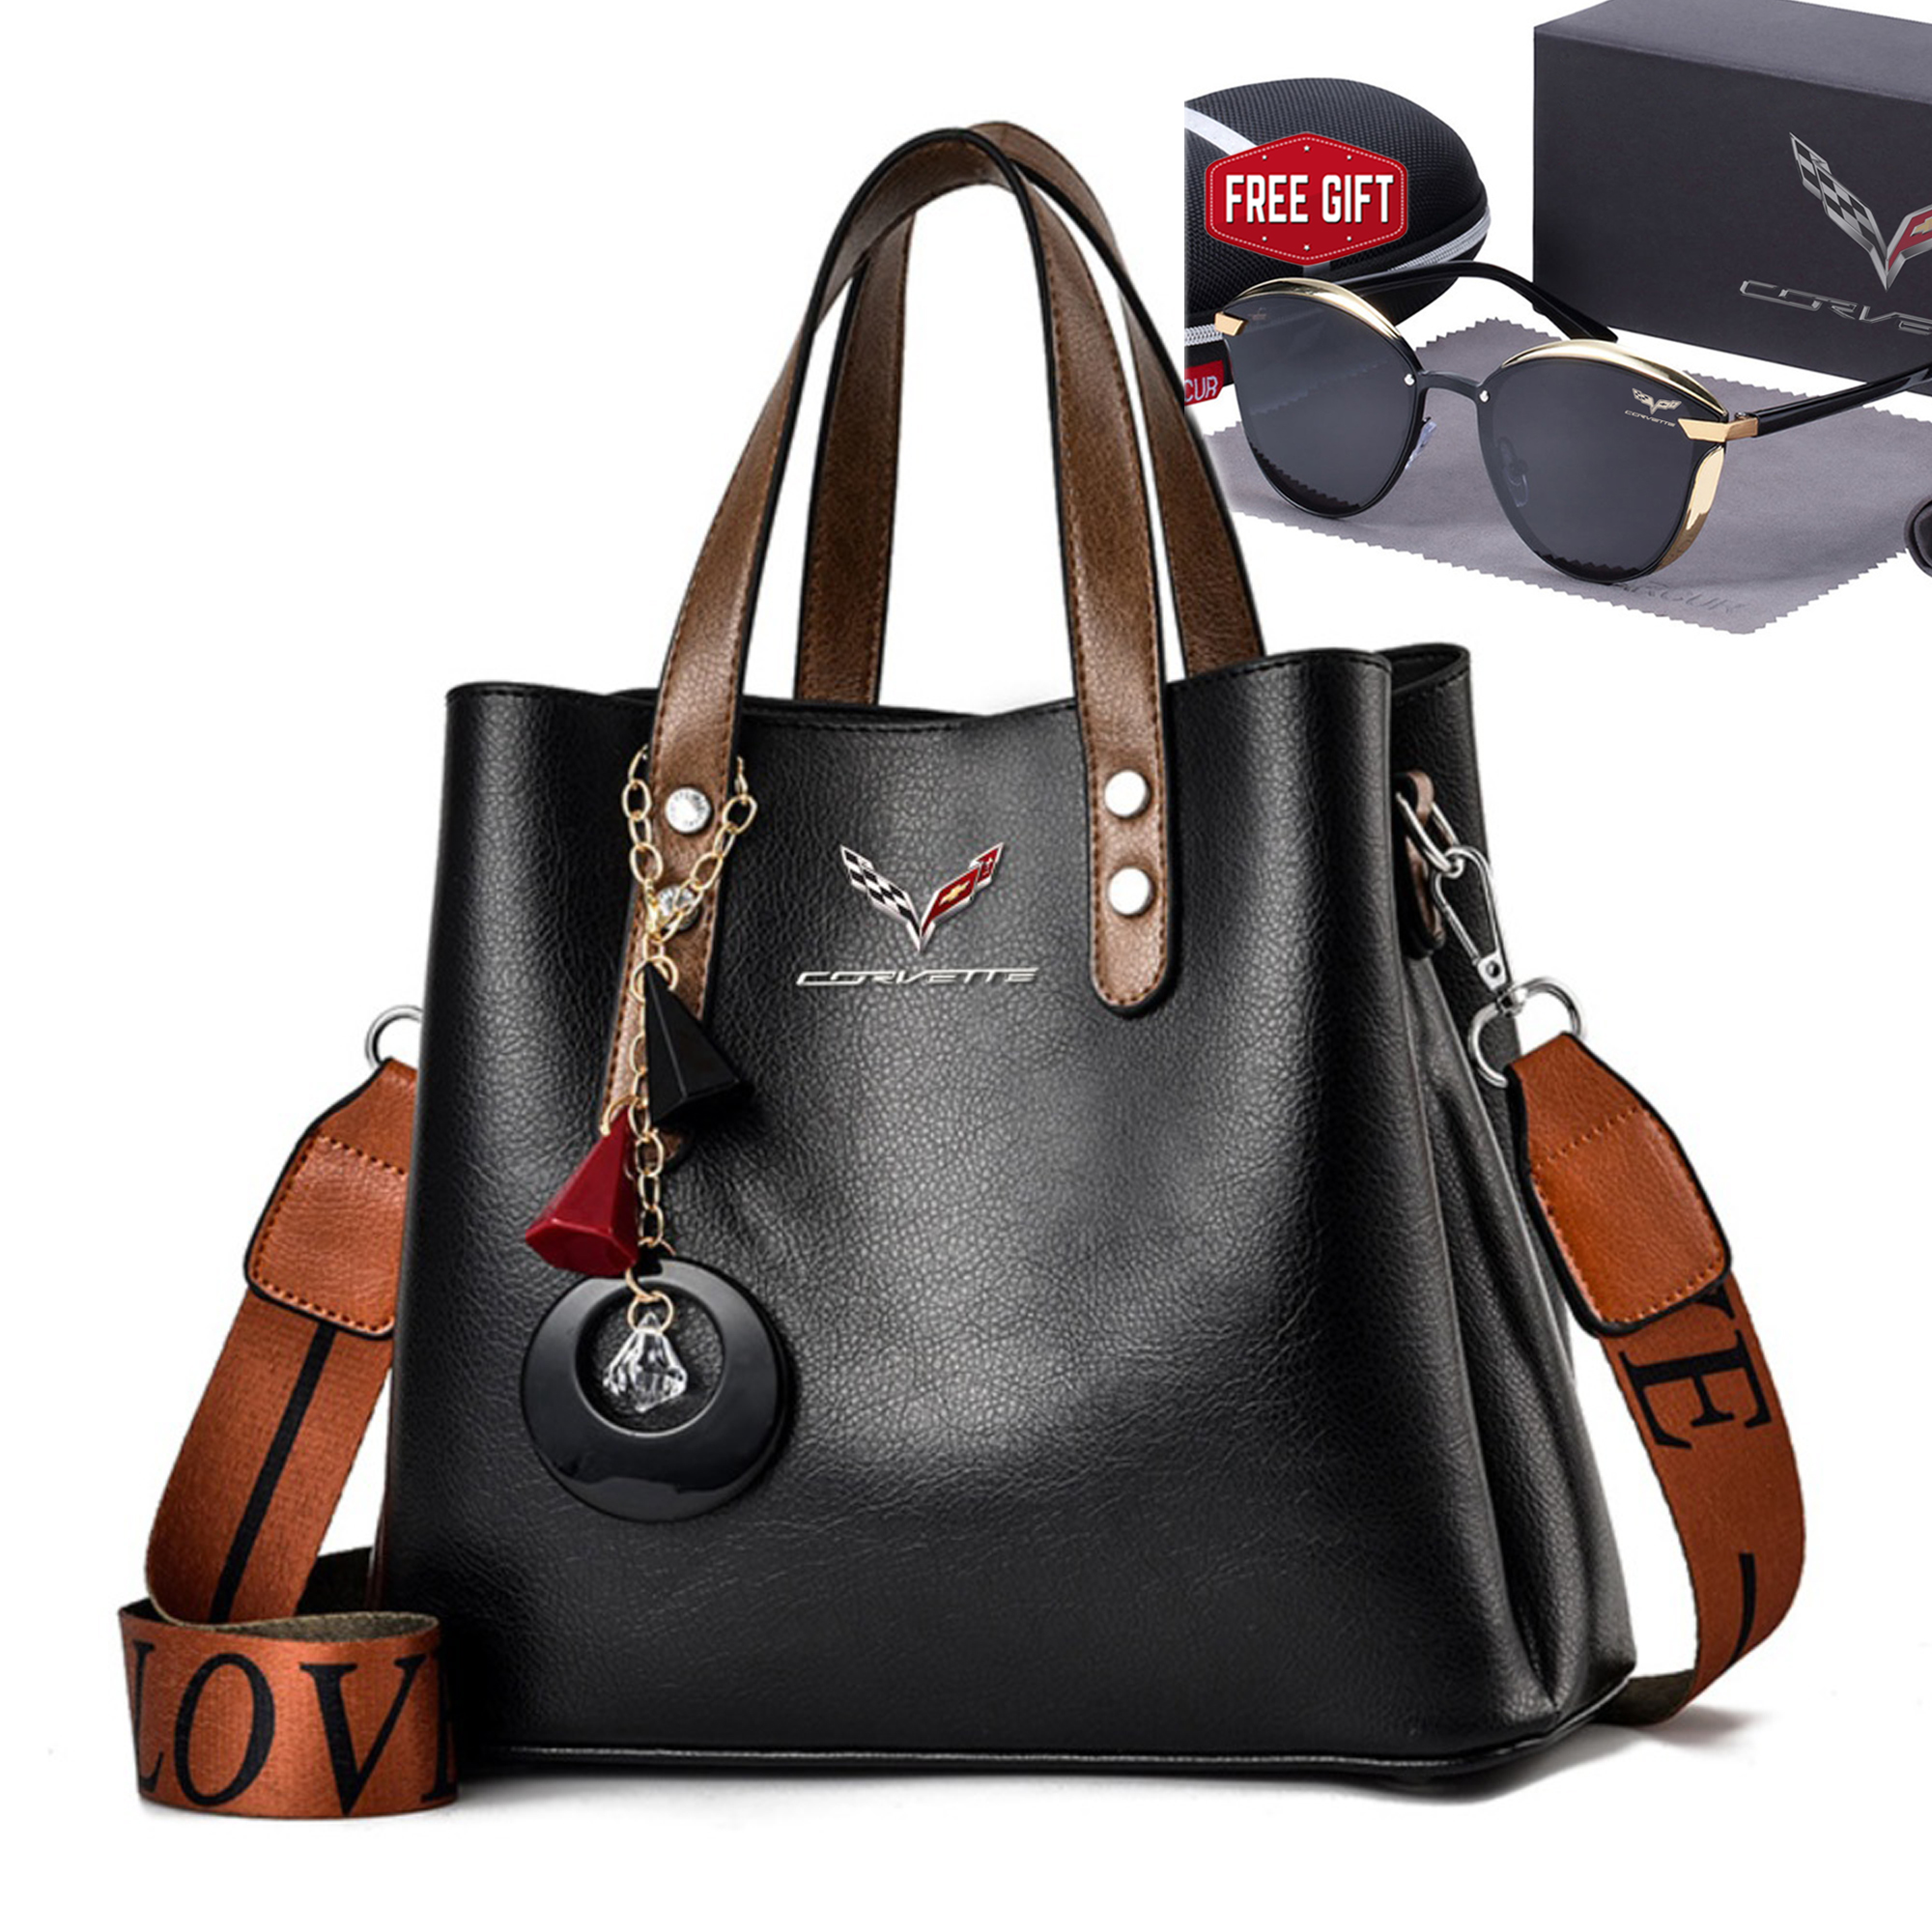 Corvette Luxury Leather Women Handbag with Free Polarized Glasses Gift